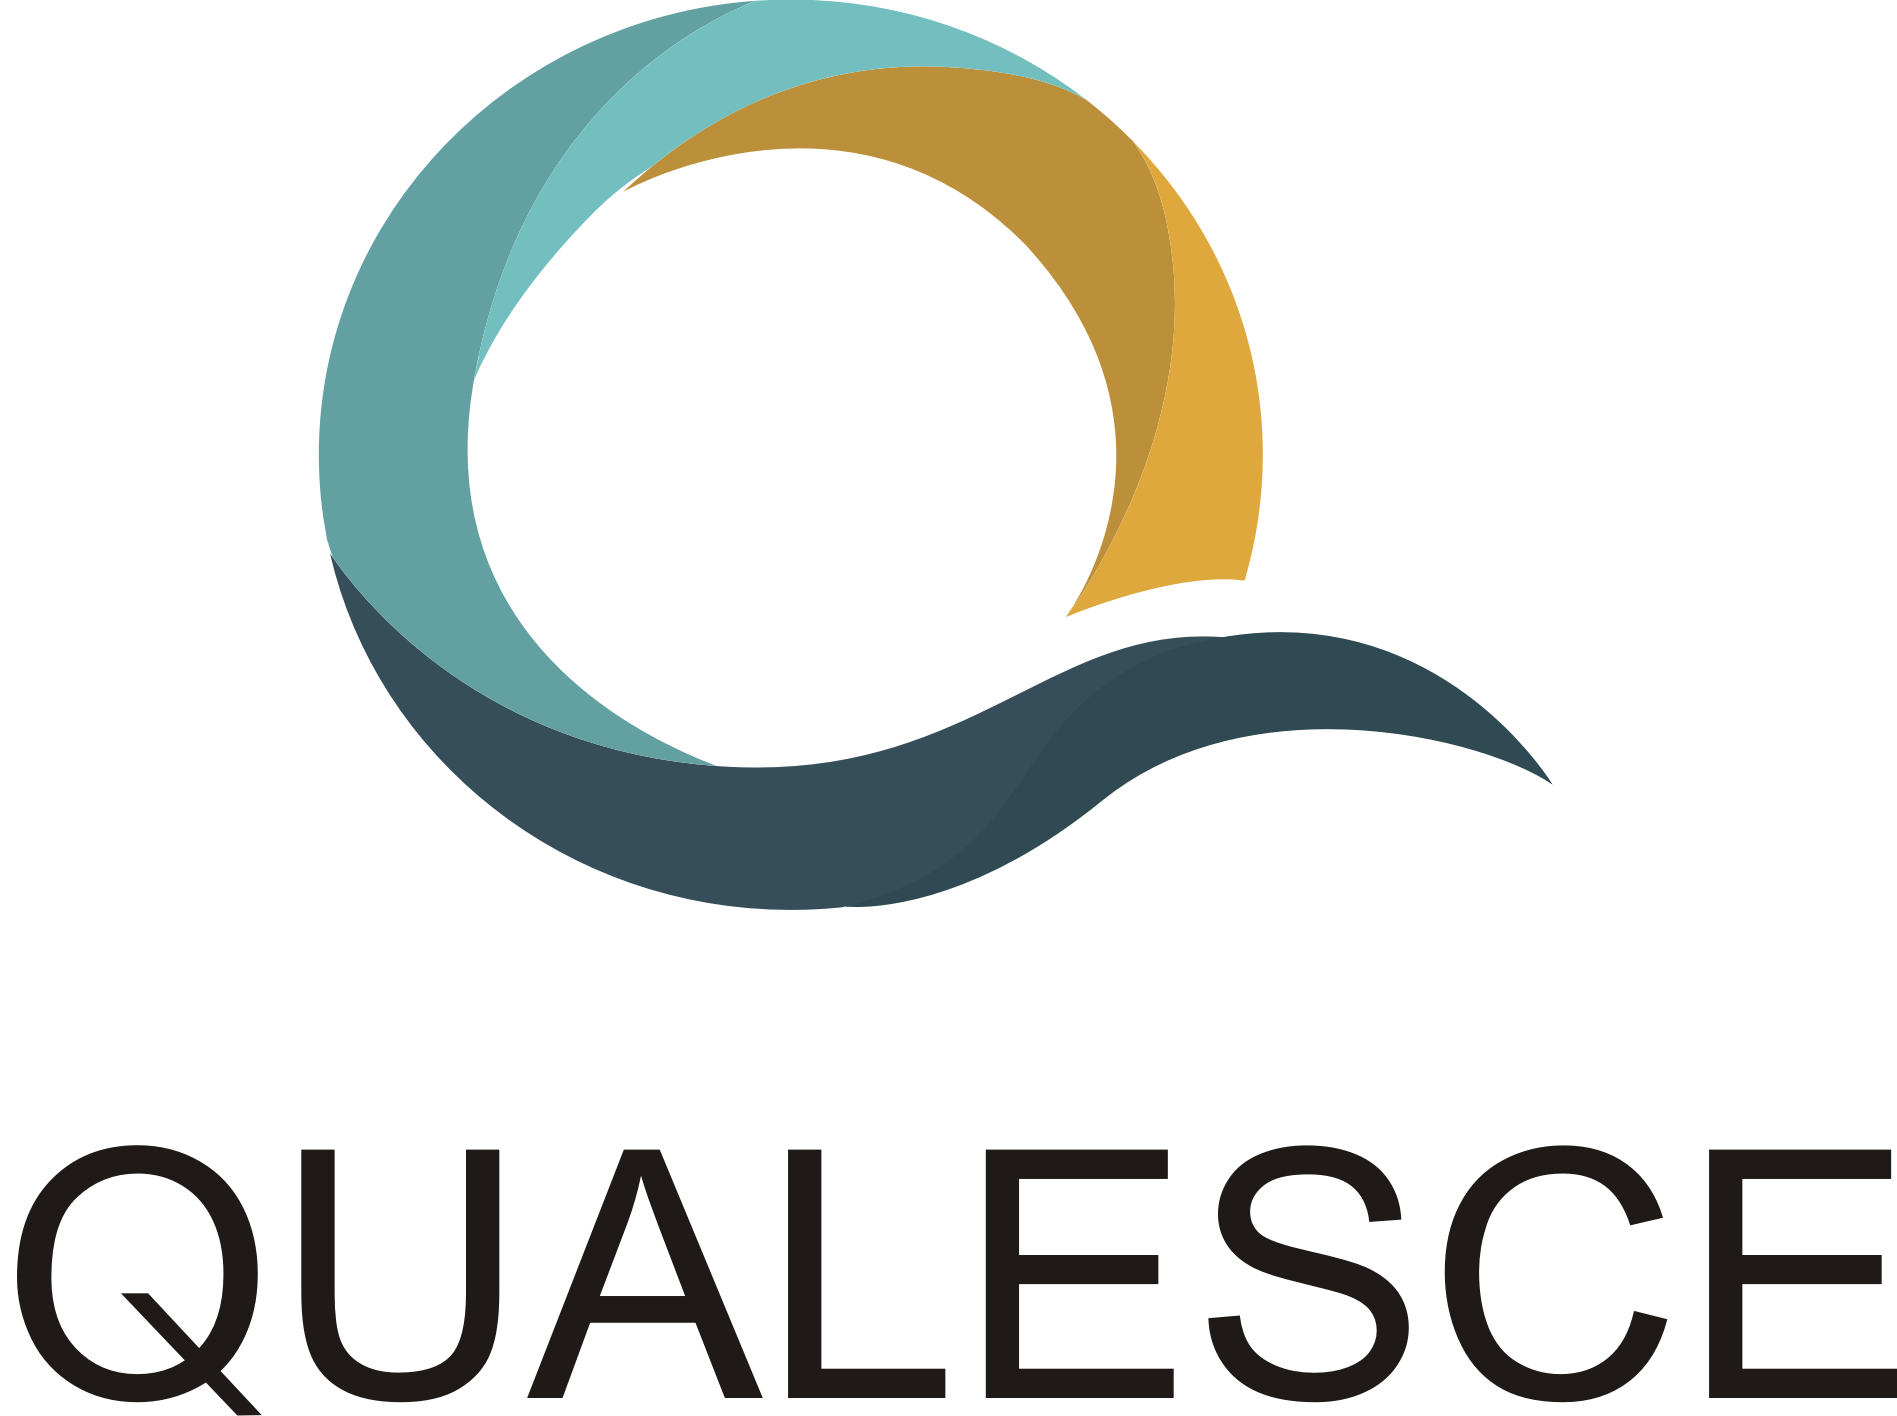 Qualesce Logo New Oct 2020